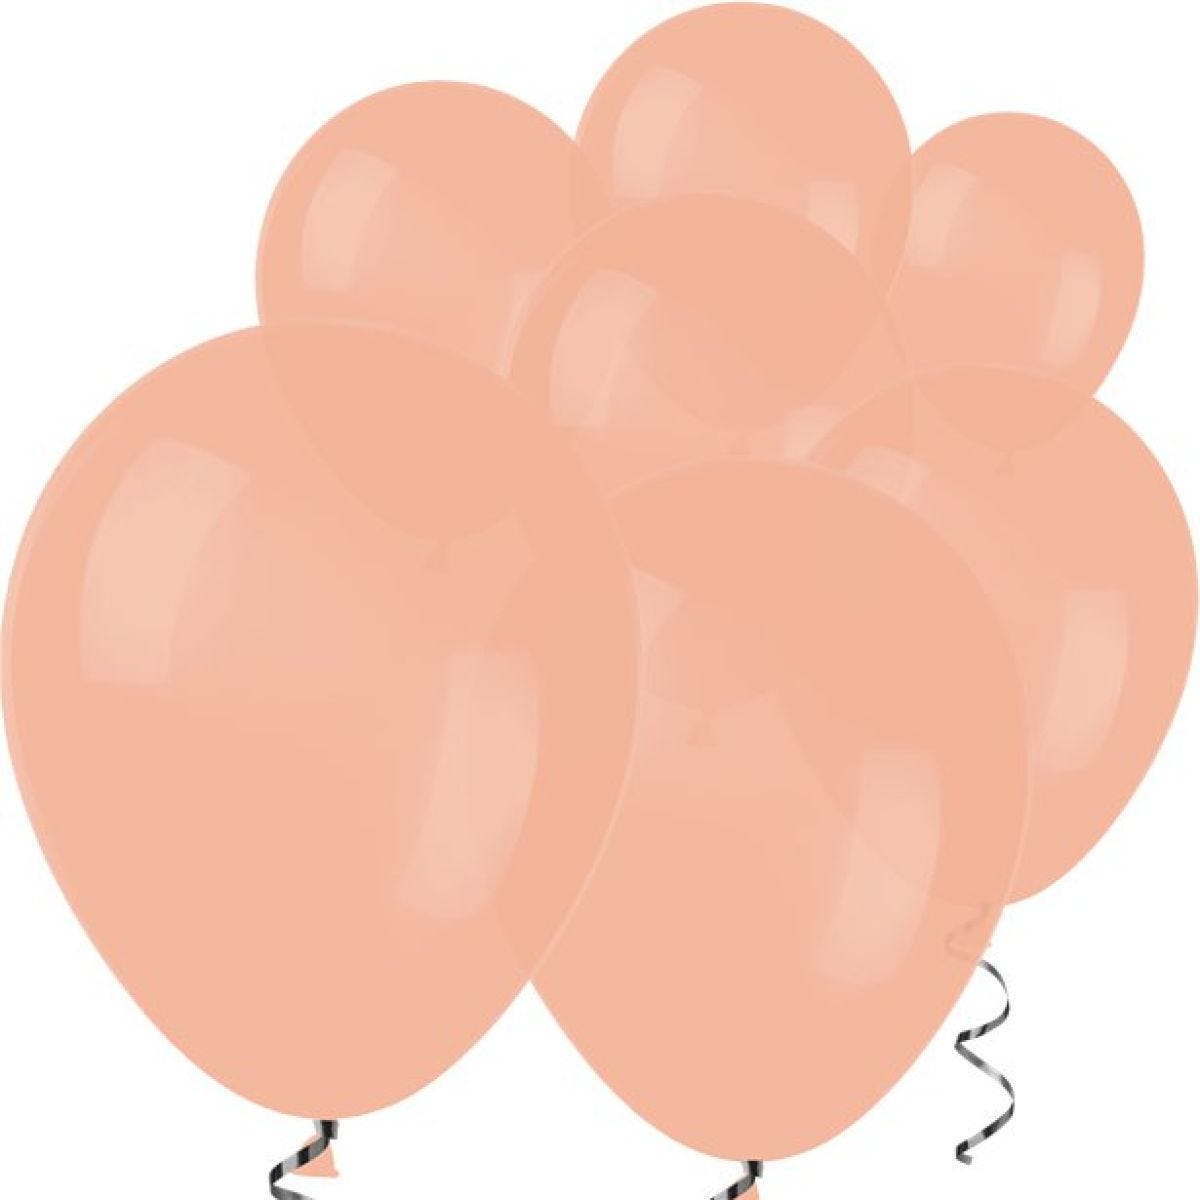 Peach Mini Balloons - 5" Latex Balloons